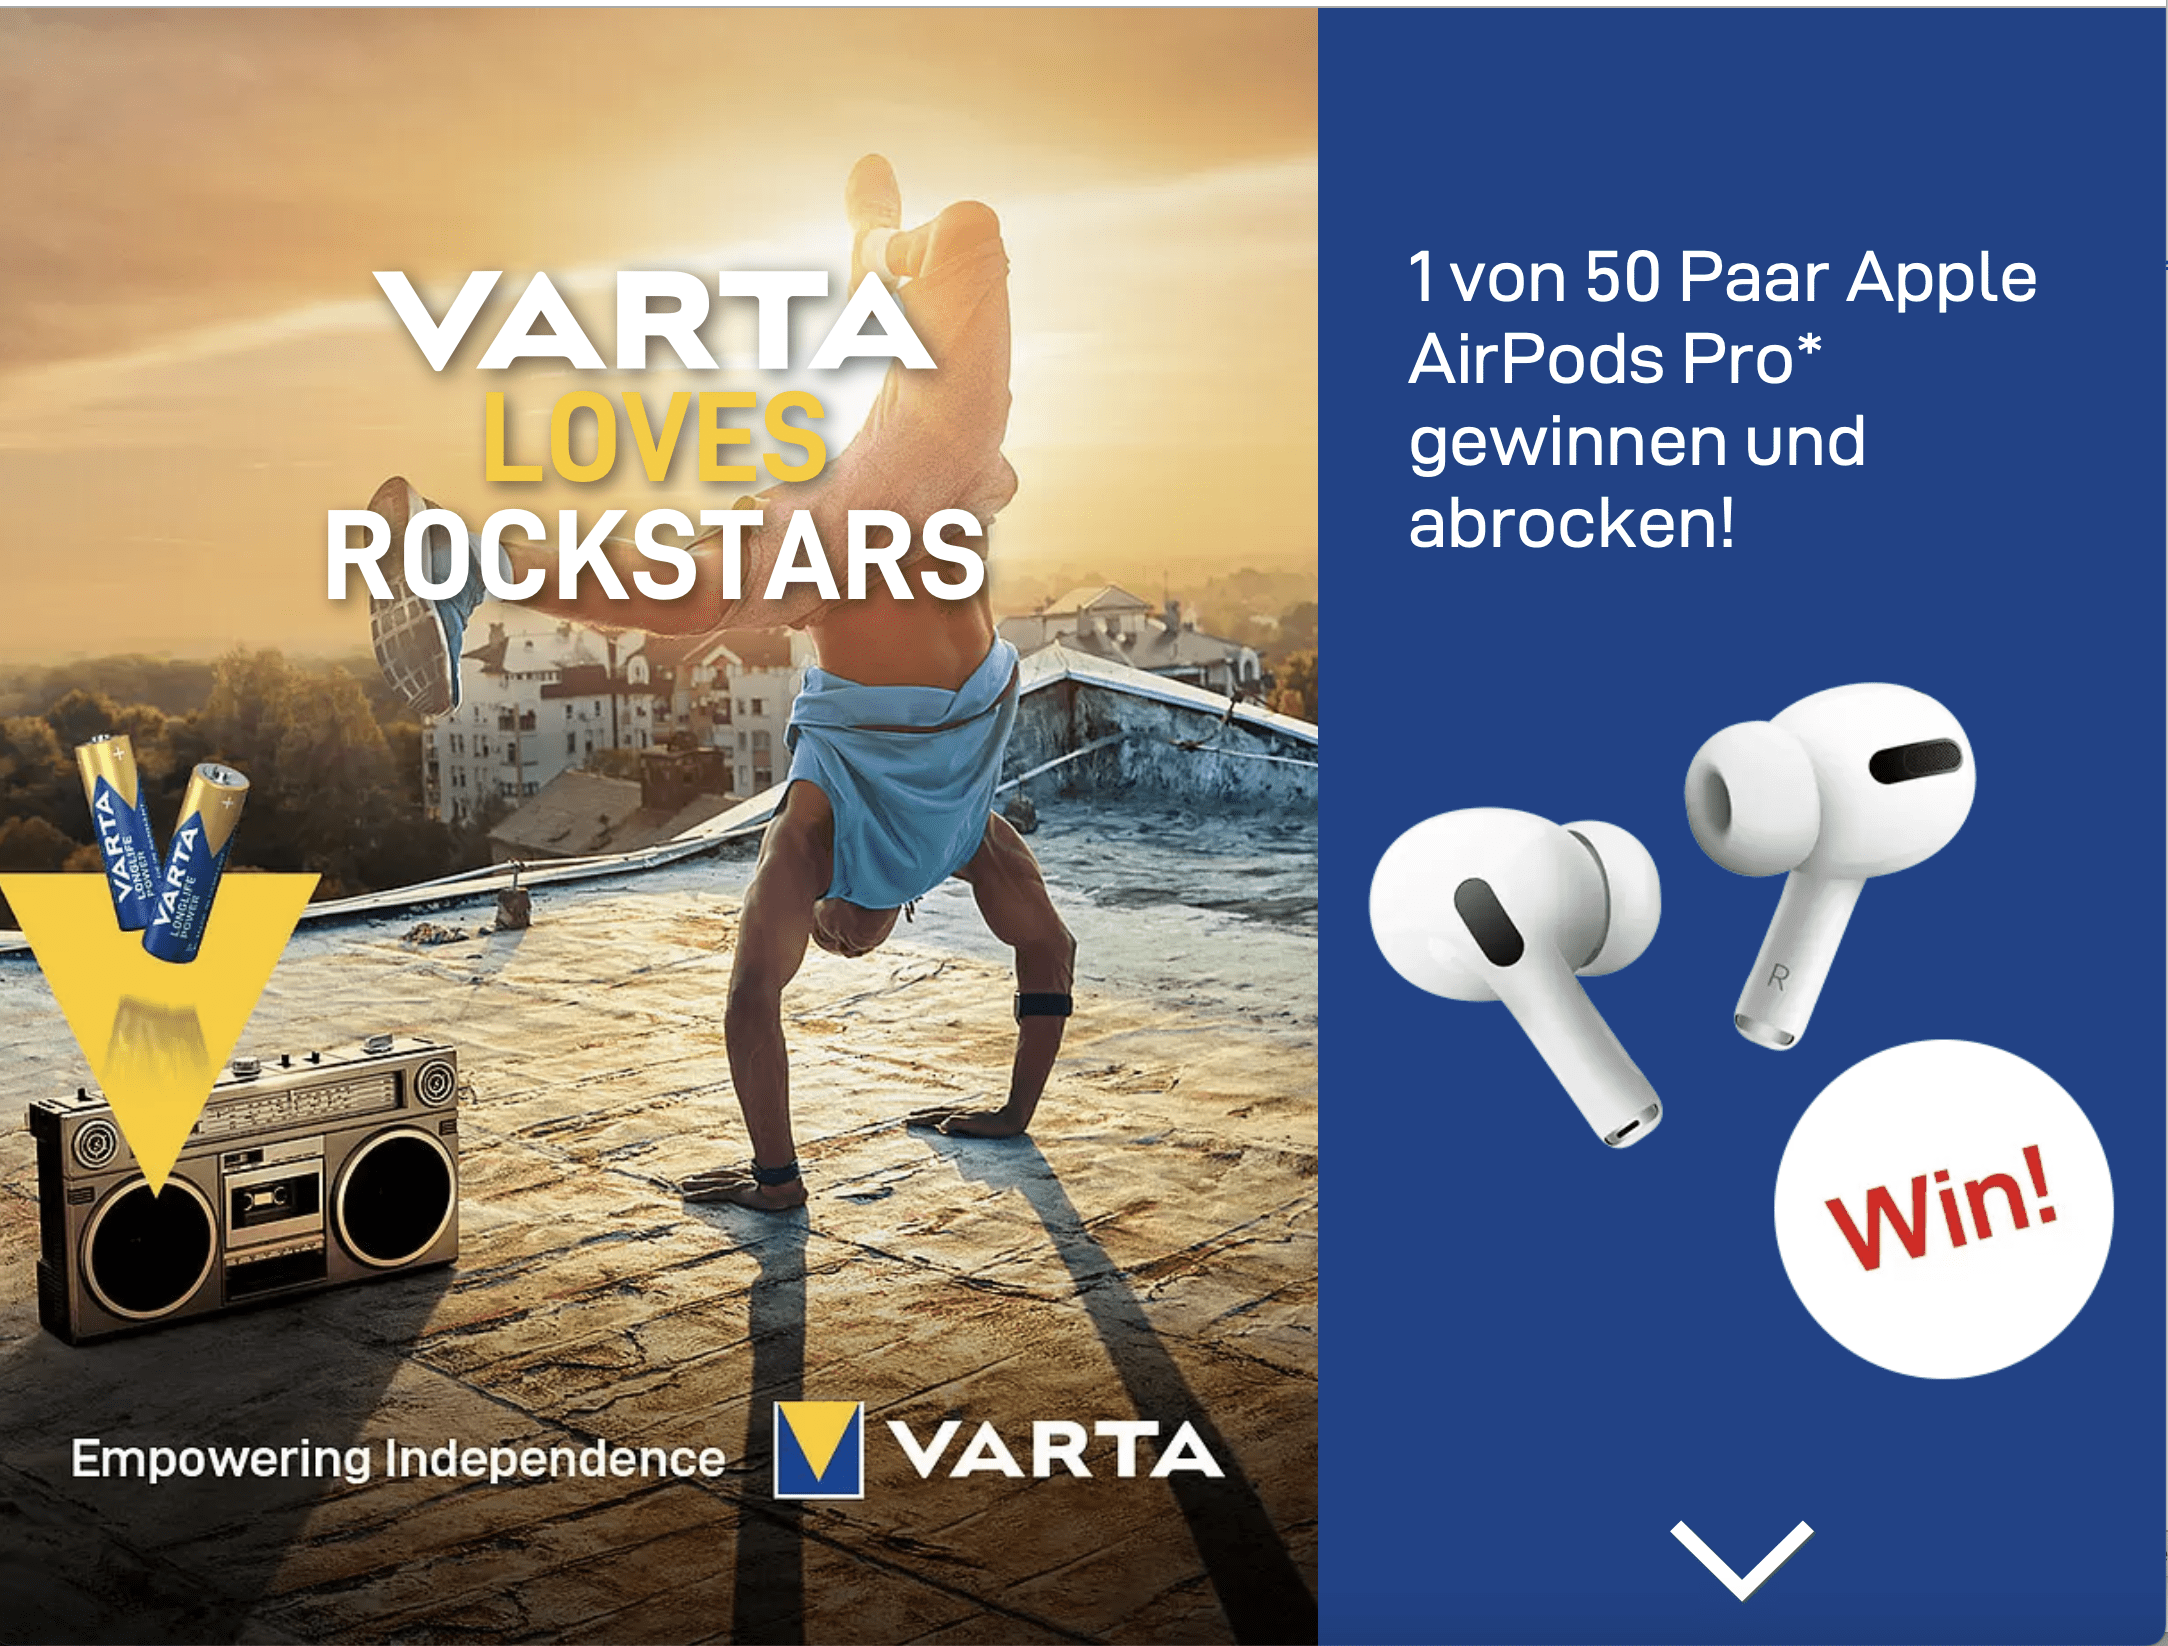 case_VARTA loves Rockstars_Apple Airpods Pro gewinnen